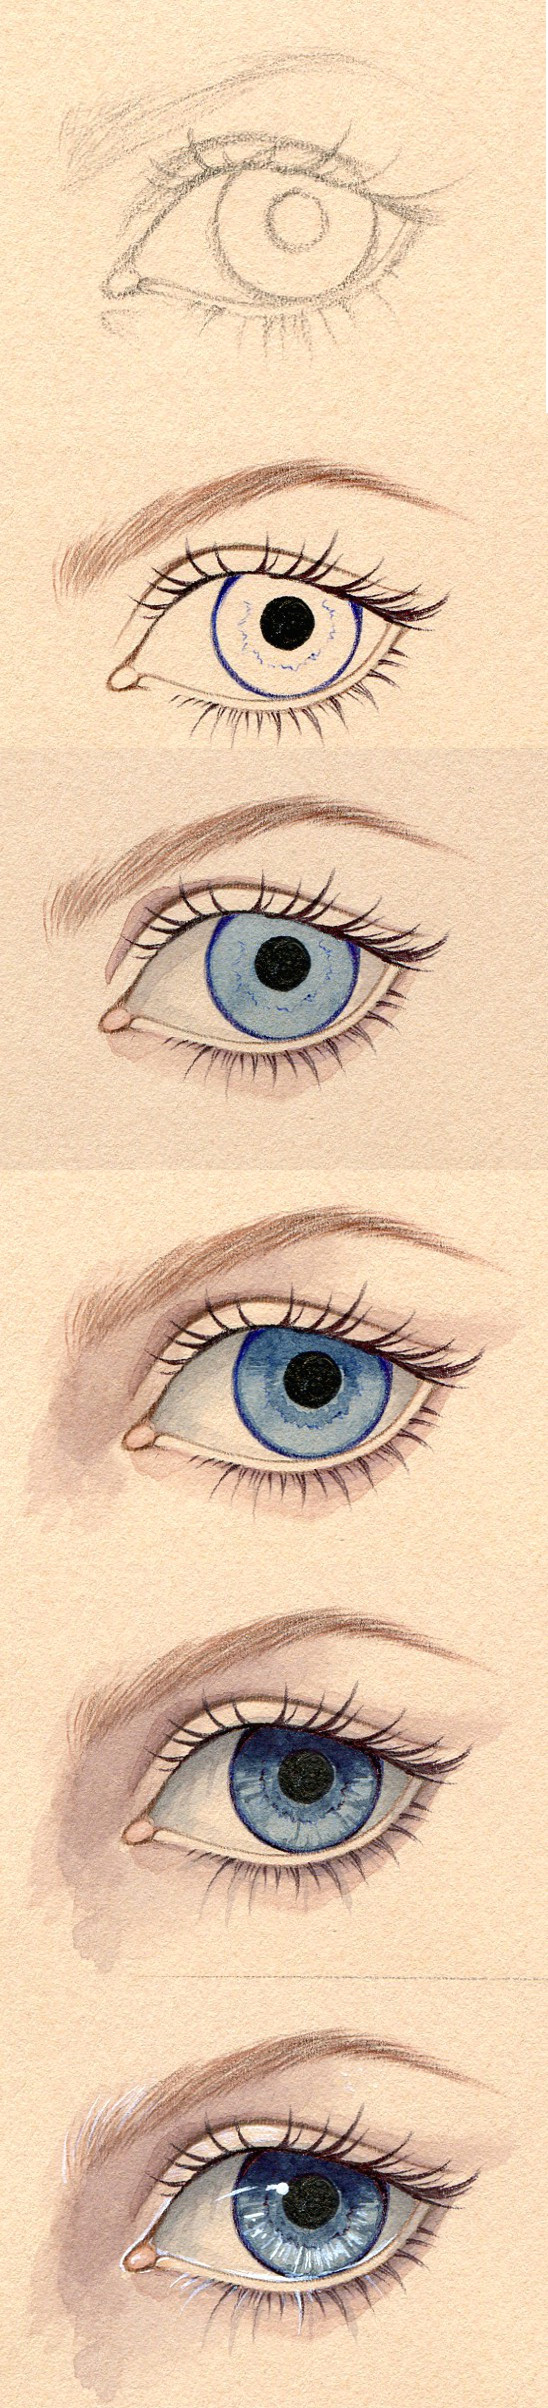 Drawing Eyes Tutorial Deviantart Eye Tutorial by Neko Art Deviantart Com On Deviantart Human